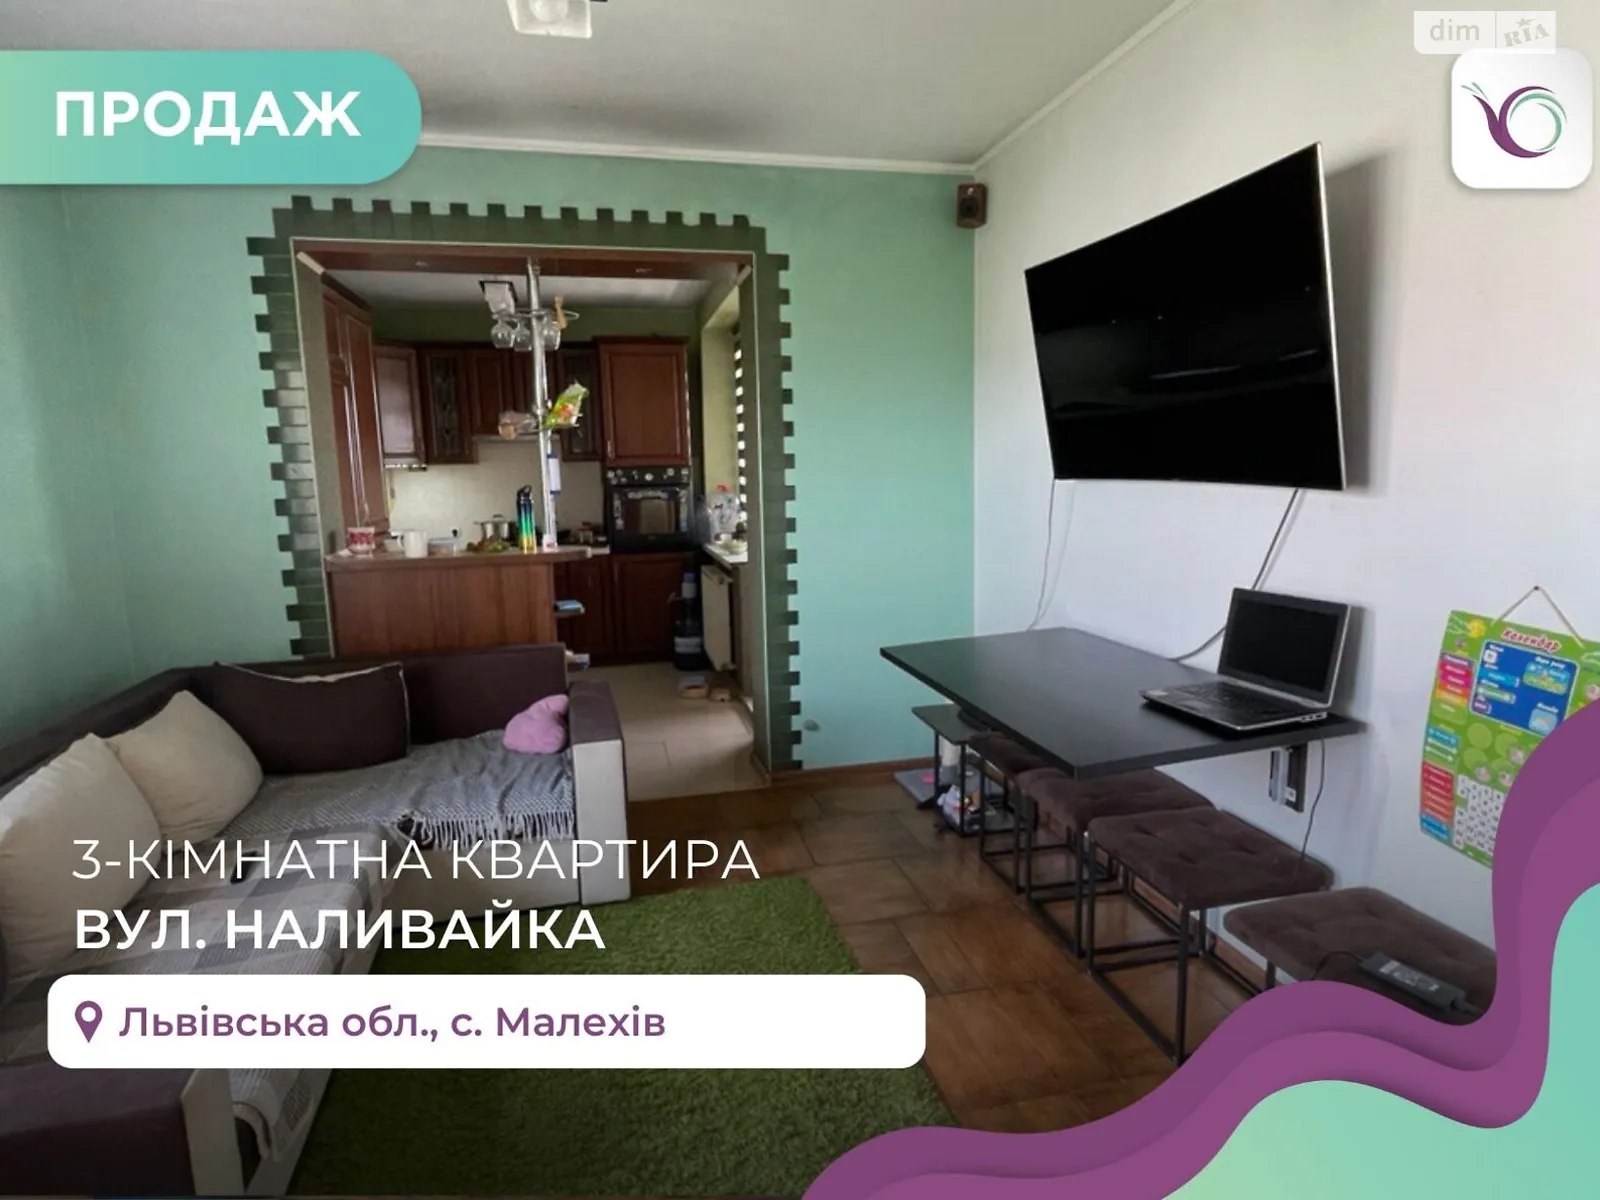 Продается 3-комнатная квартира 69 кв. м в Малехове, цена: 72000 $